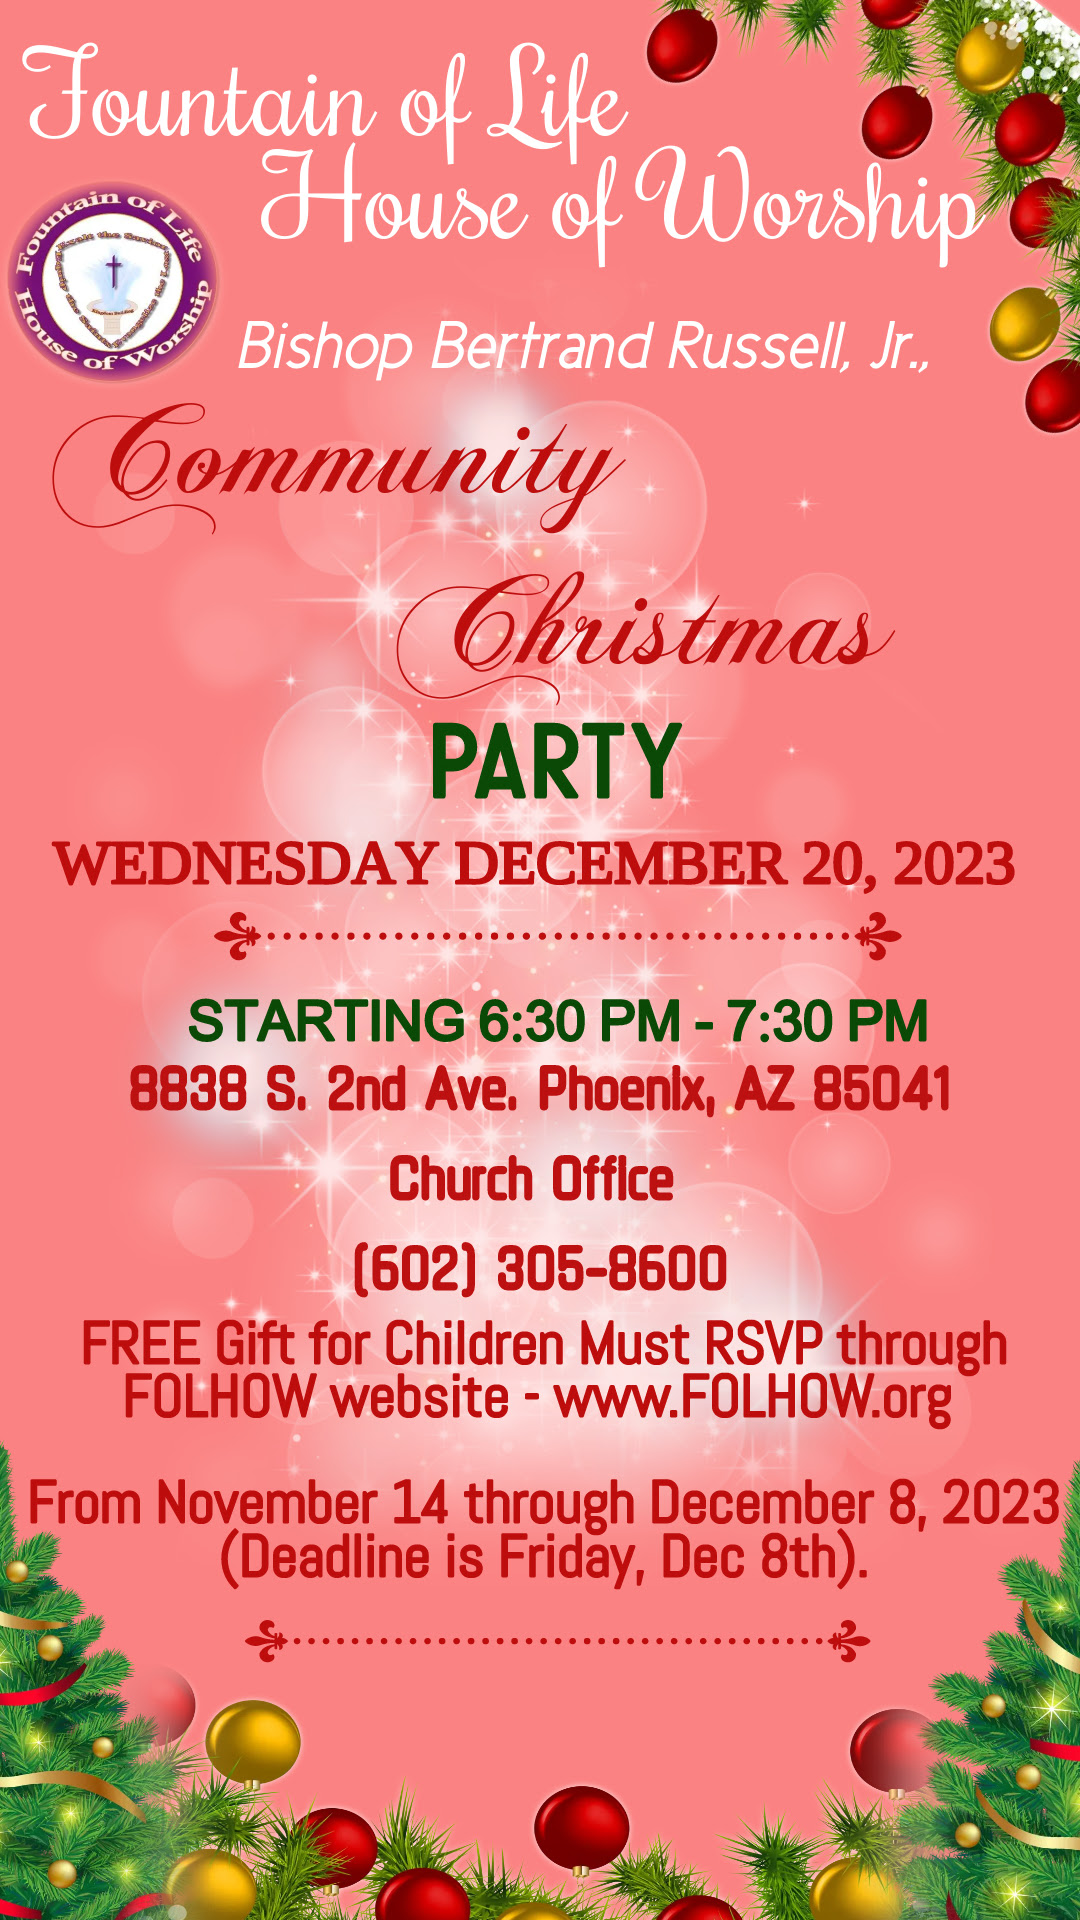 Community Christmas Party - Dec. 20